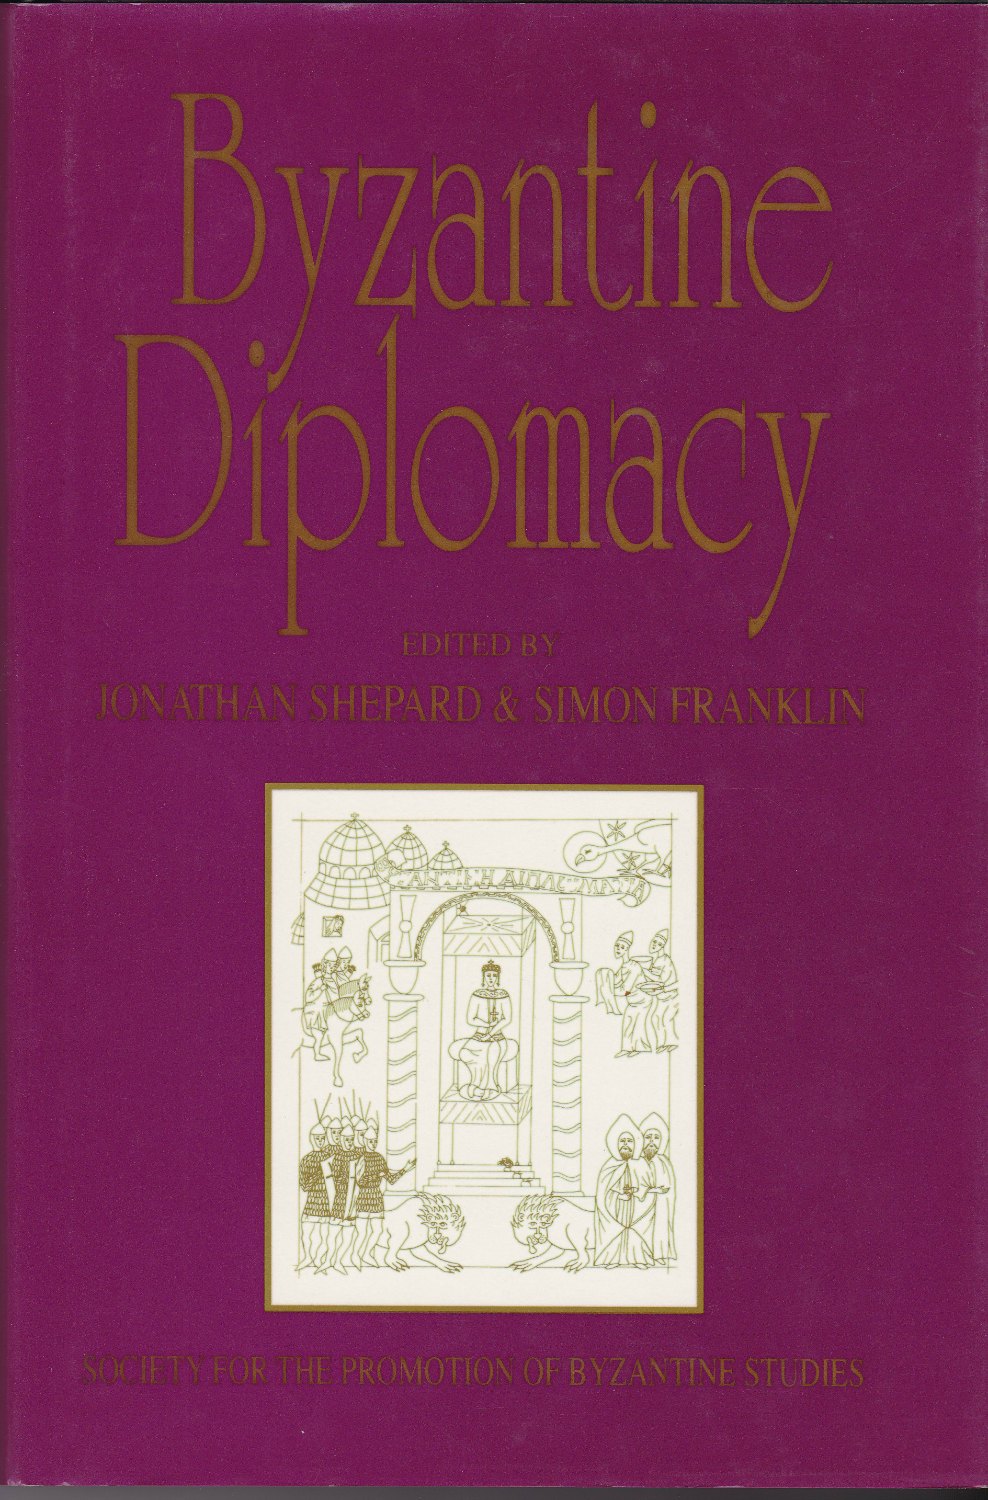 Byzantine diplomacy.　(Society for the promotion of Byzantine studies publications ; 1)